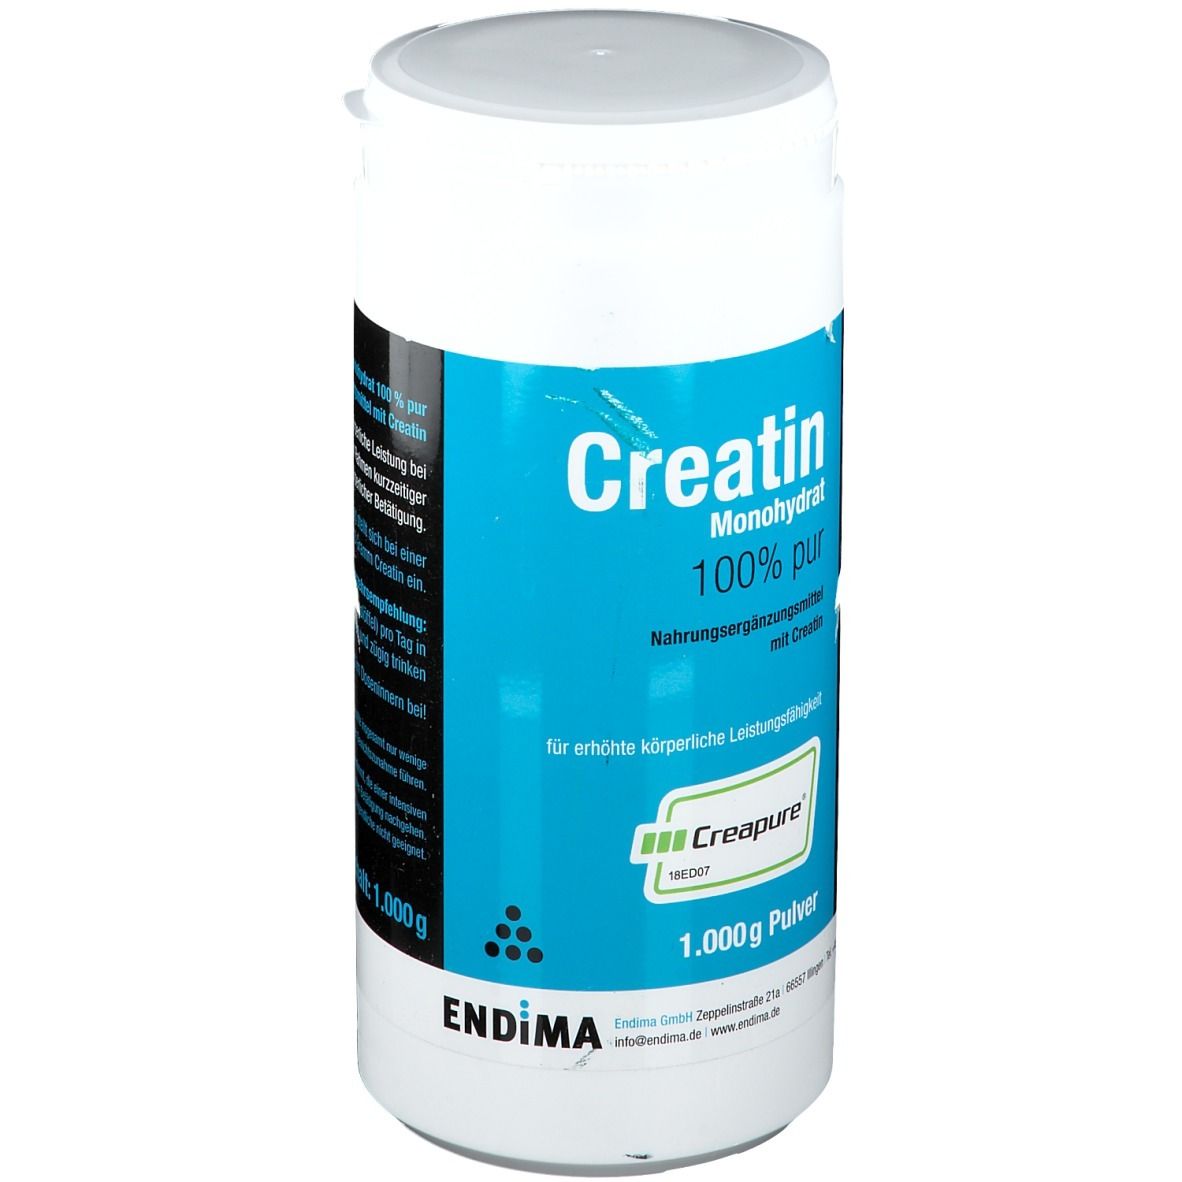 Endima® Creapure® Creatin Monohydrat 100% Pur Pulver